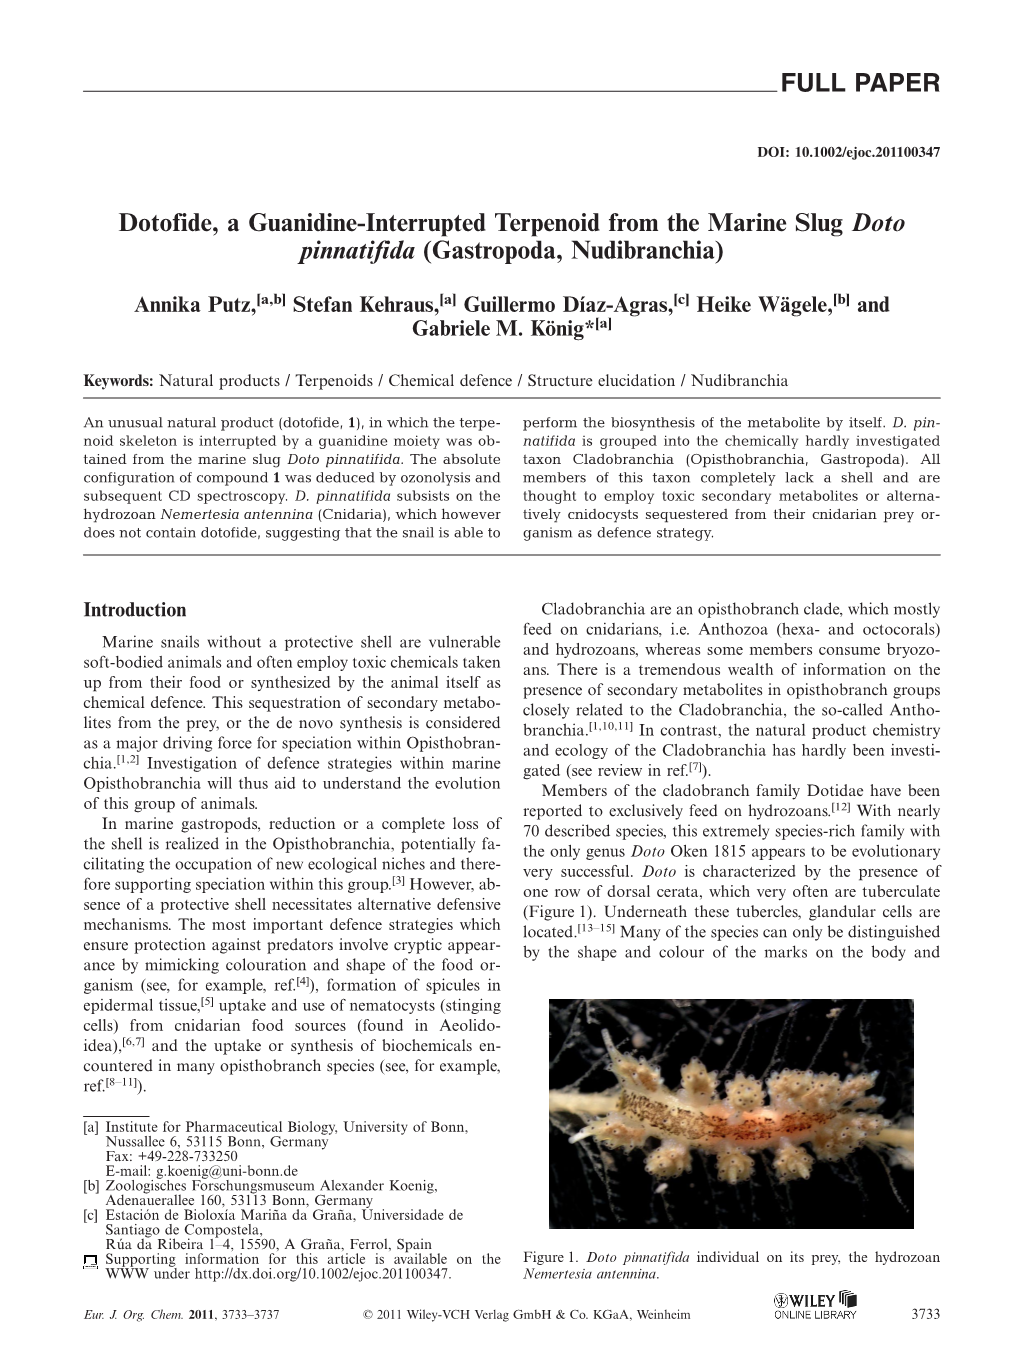 Dotofide, a Guanidine-Interrupted Terpenoid from the Marine Slug Doto Pinnatifida (Gastropoda, Nudibranchia)